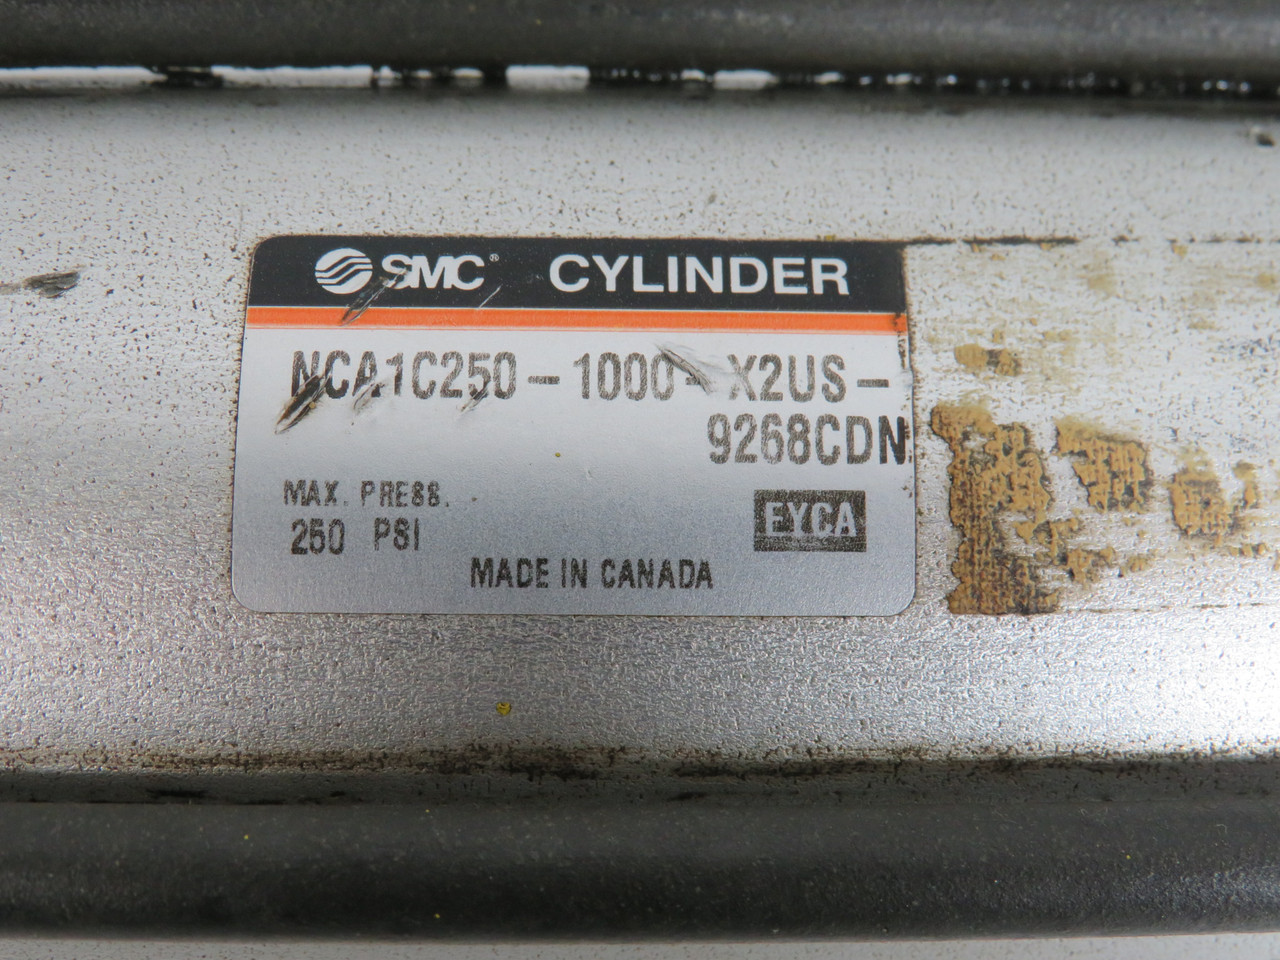 SMC NCA1C250-1000-X2US-9268CDN Cylinder 2.5" Bore 10" Stroke *COS DMG* USED